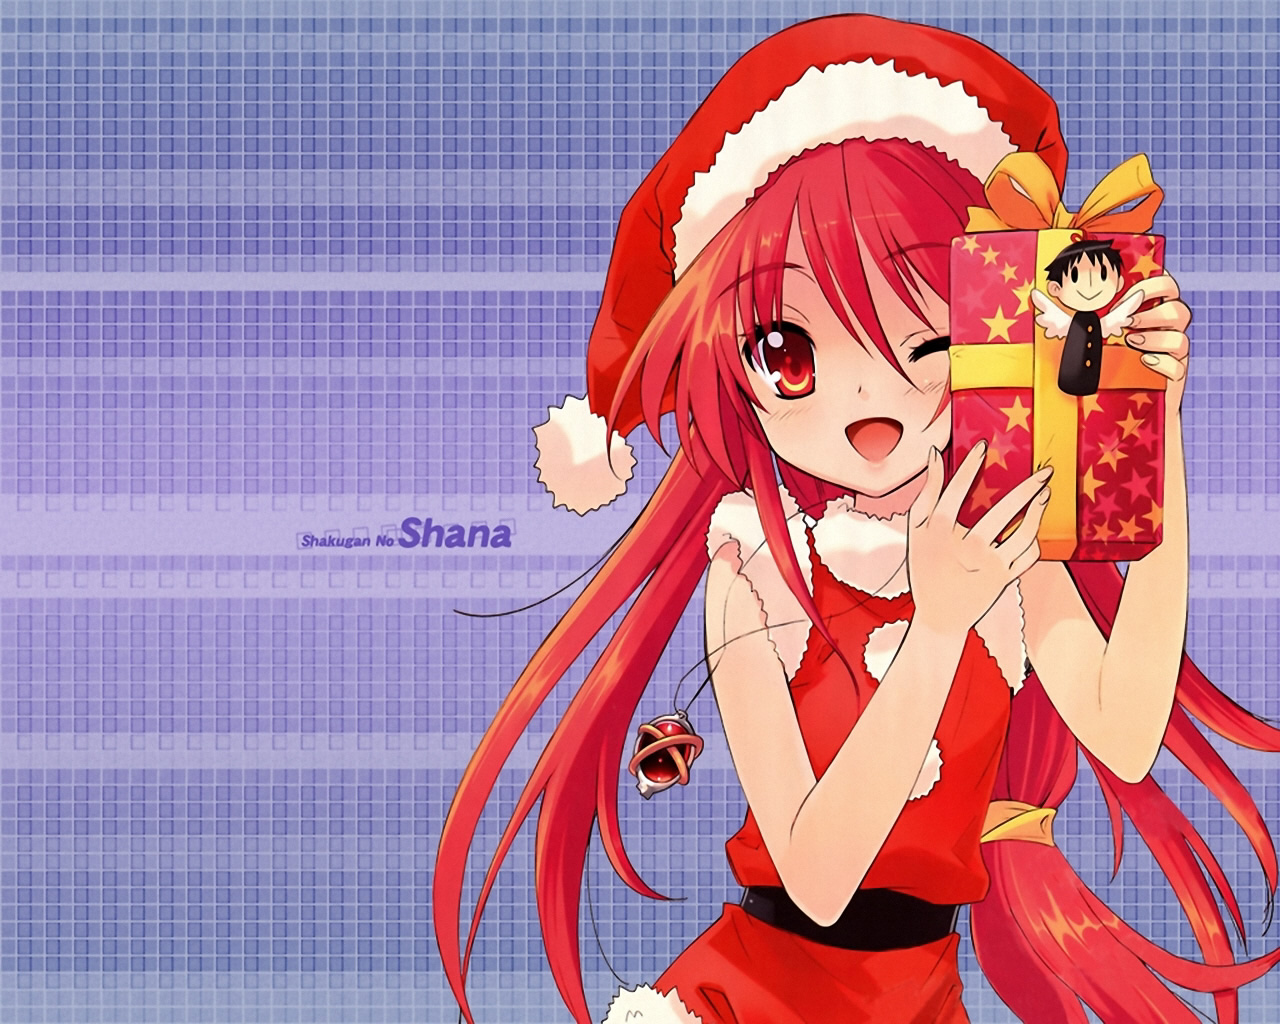 Image Title: desktop-wallpaper-anime-girl-christmas-cute-smiling